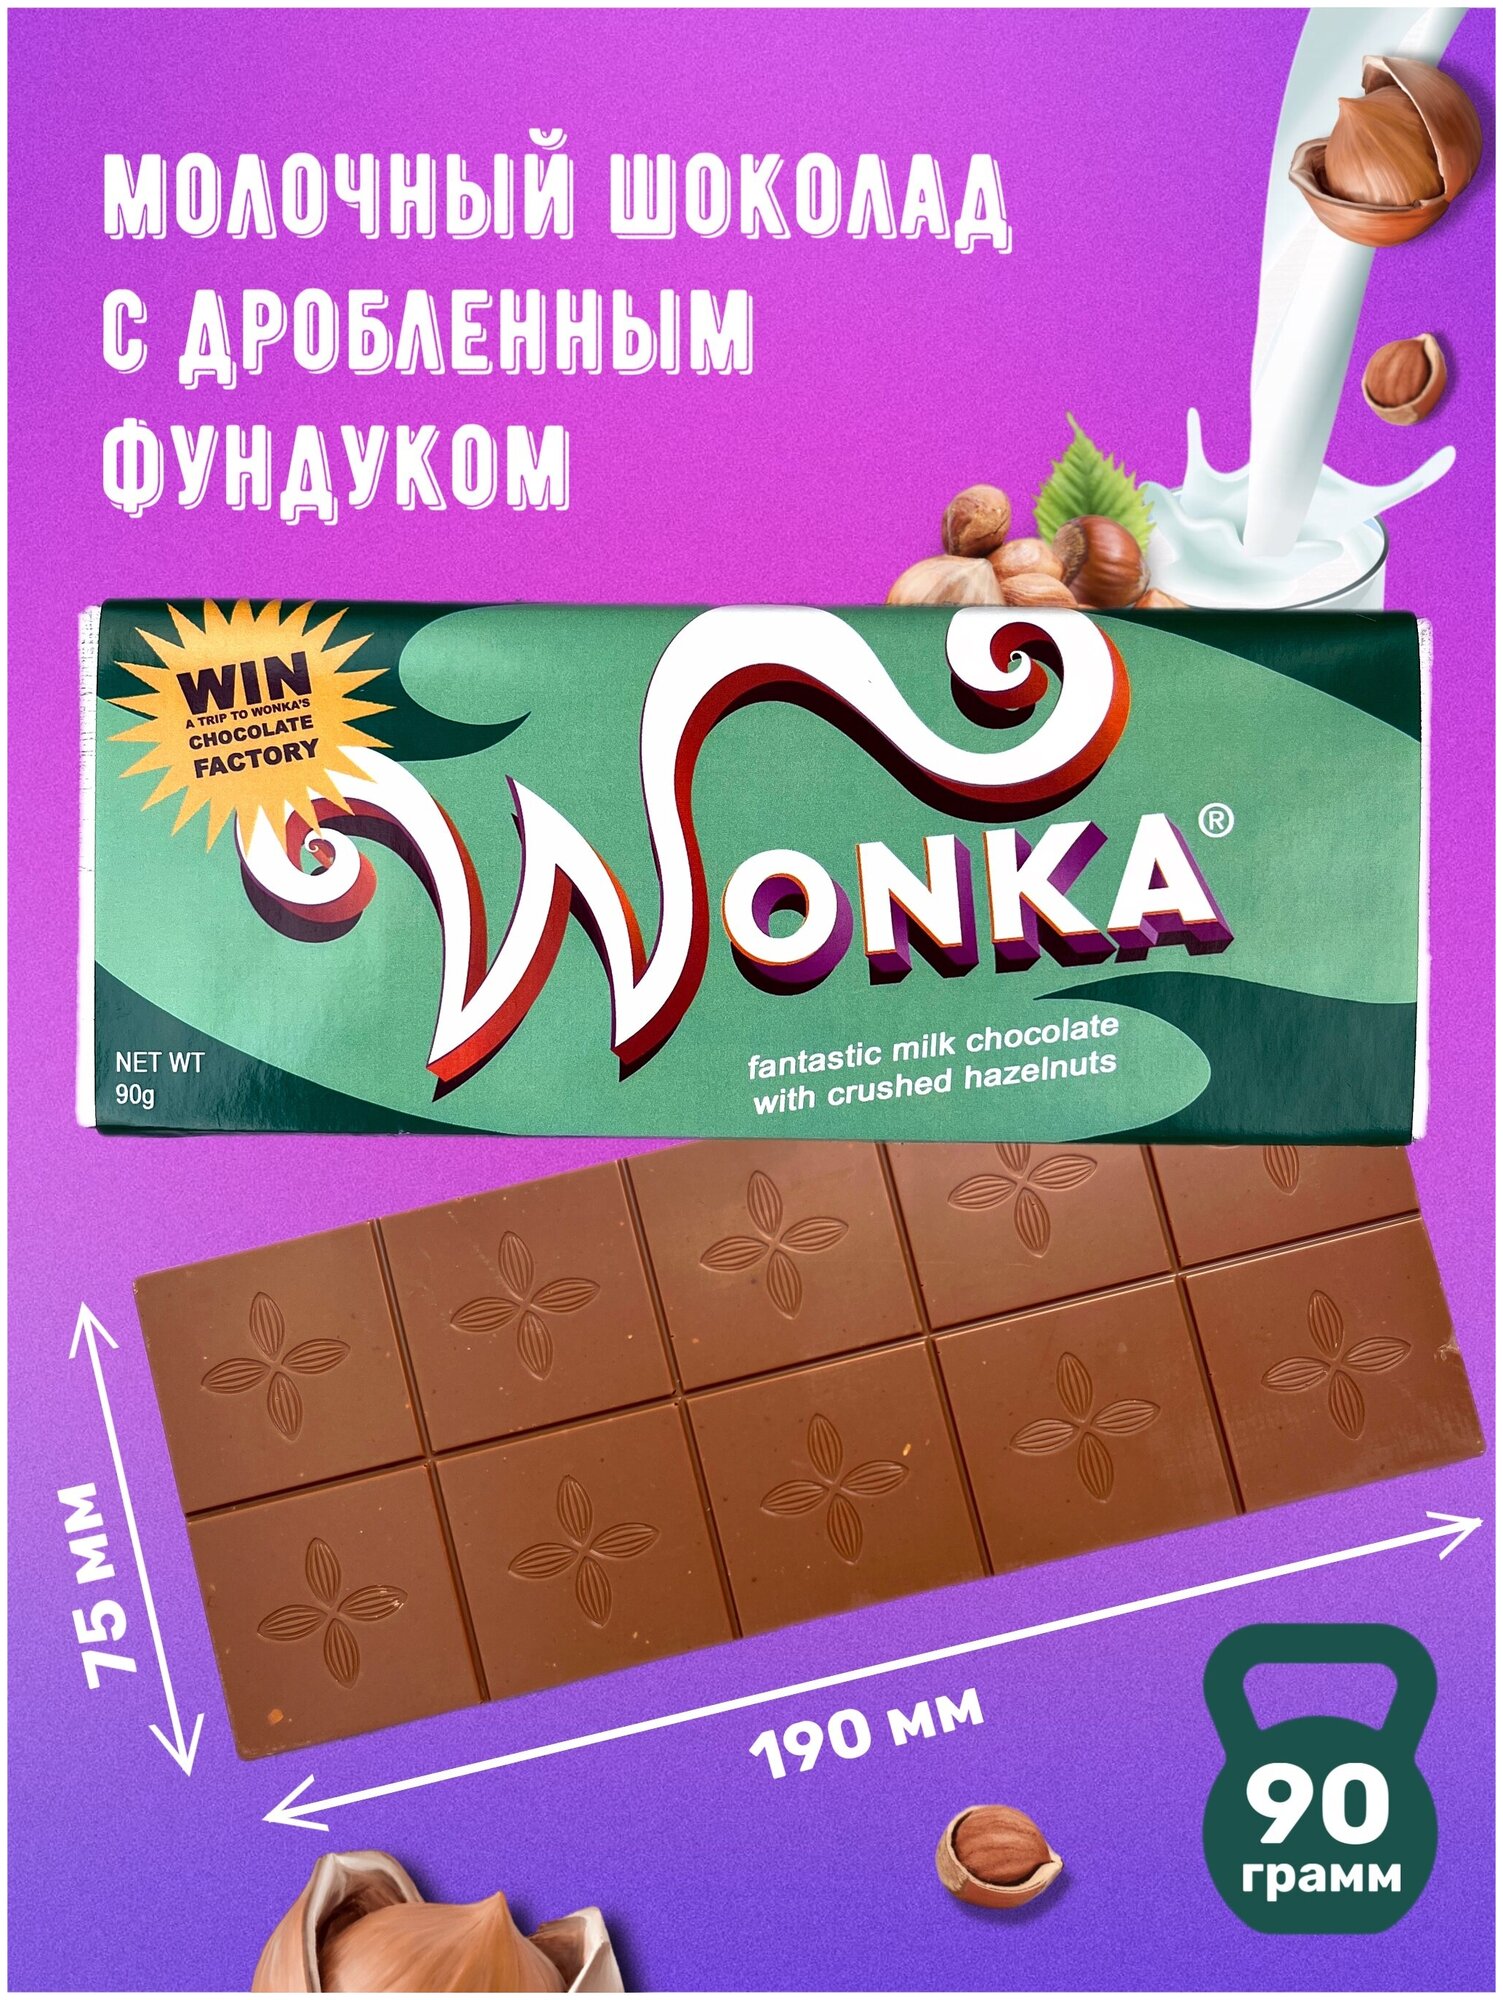 Шоколад Wonka. Шоколад Вилли Вонка с золотым билетом 4 плитки по 90 грамм набор - фотография № 7